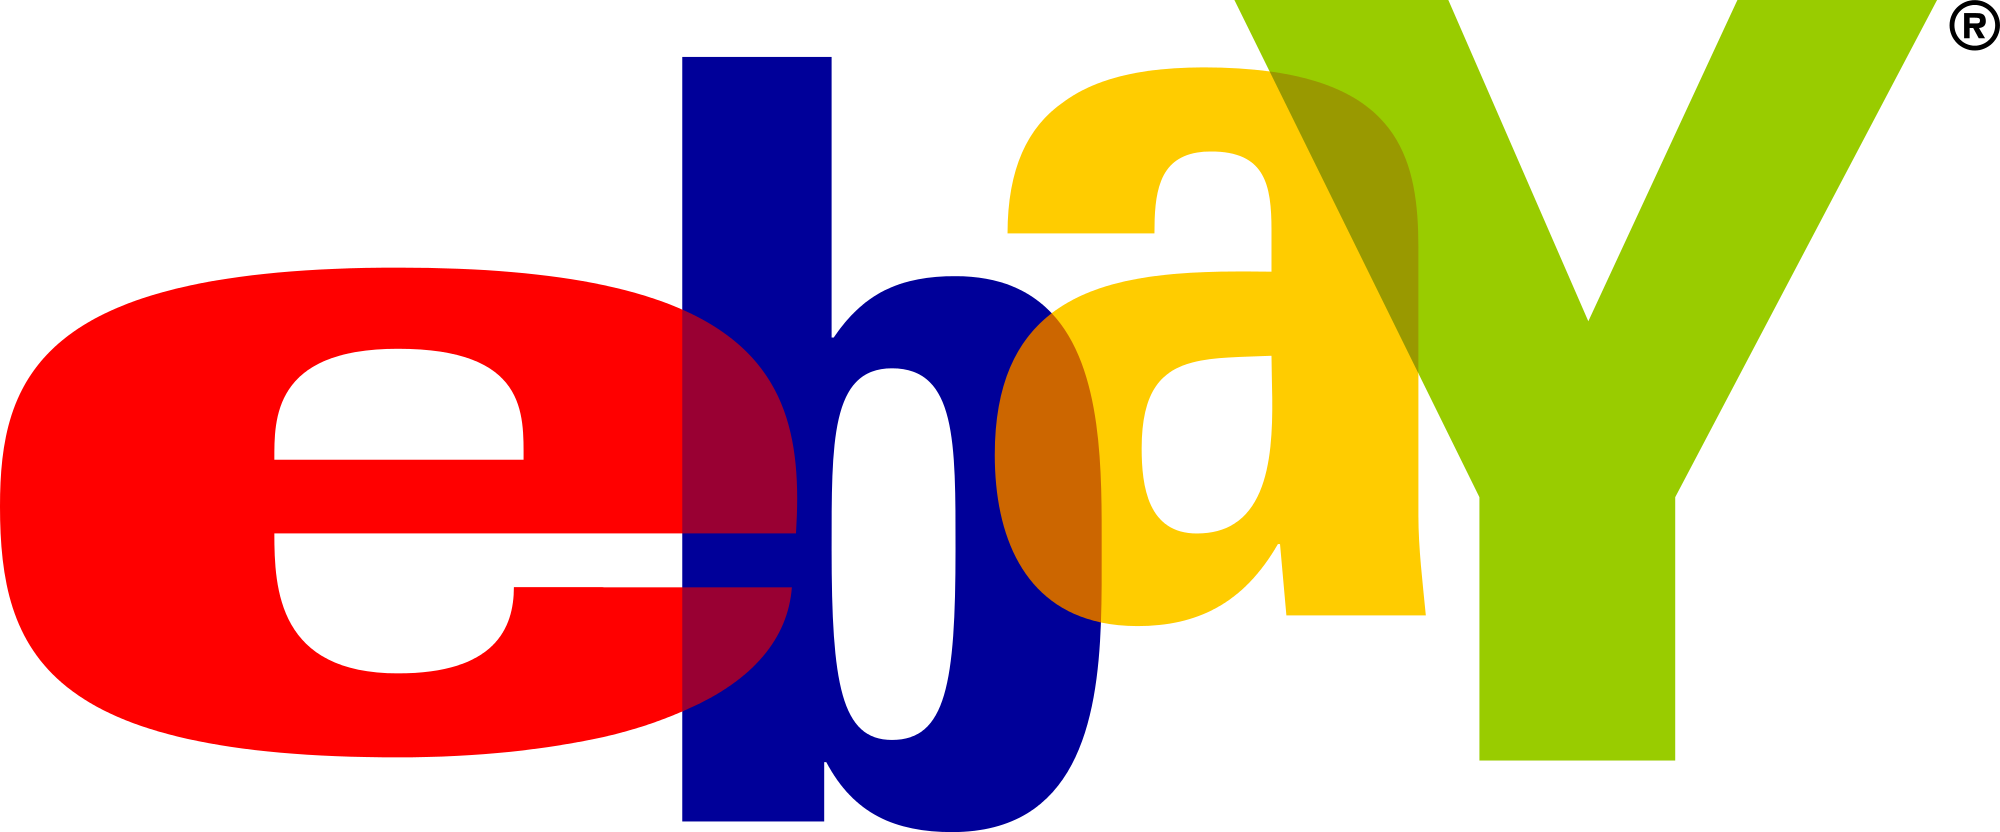 Логотип eBay